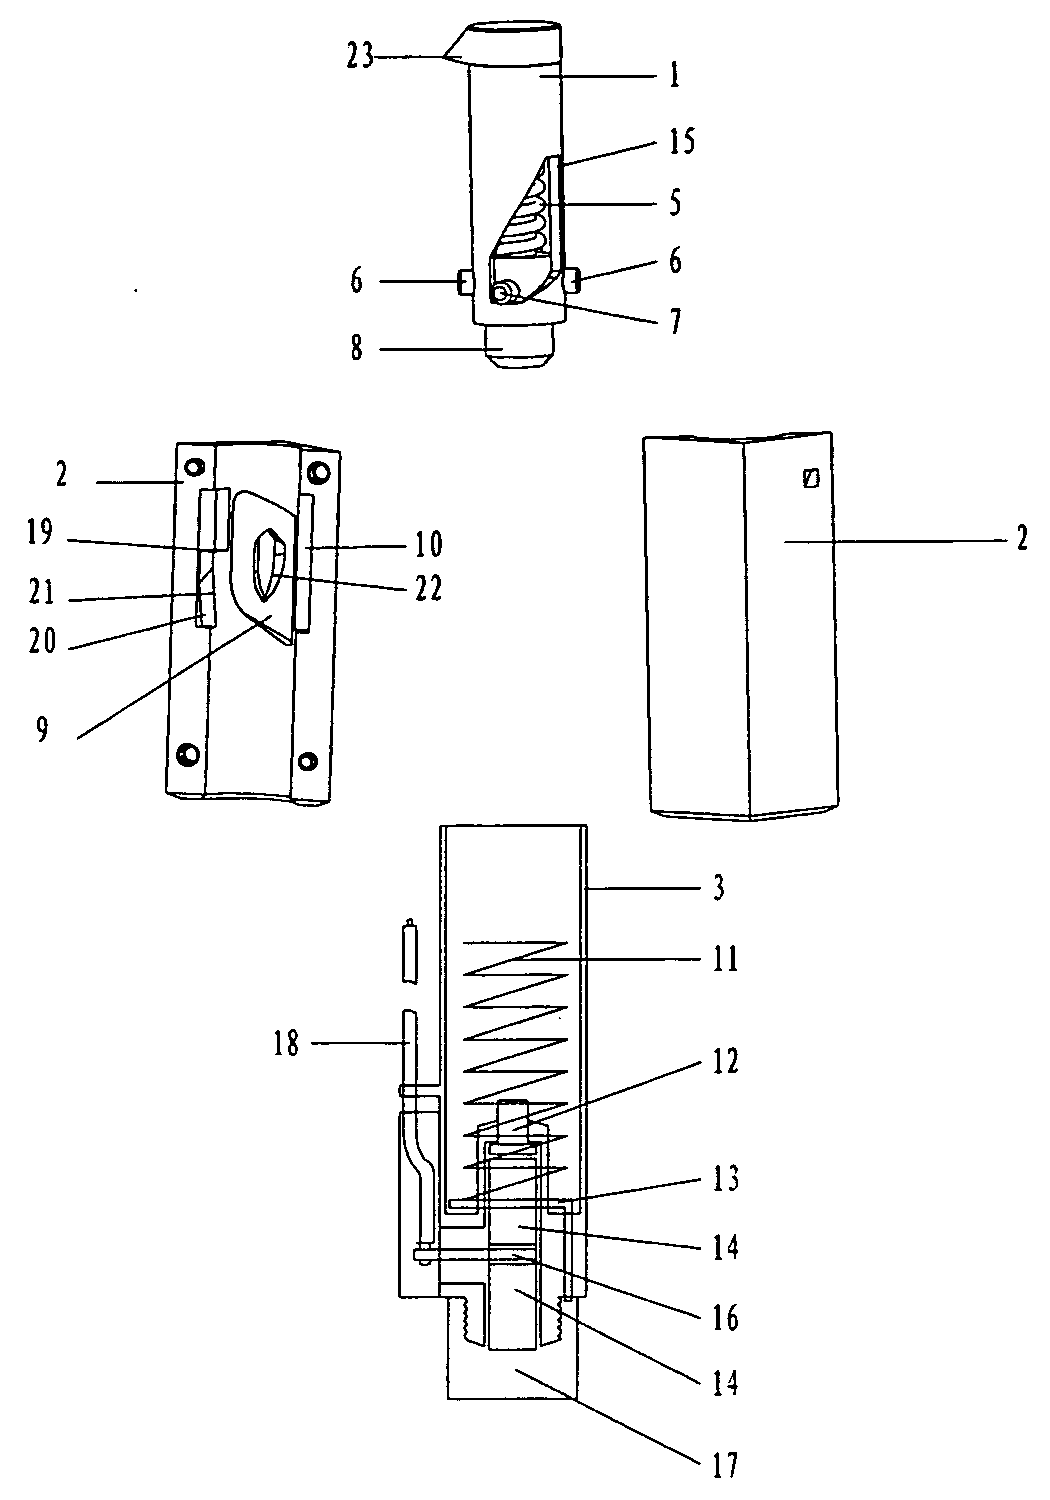 Piezoelectric ignition mechanism of child-resistant lighter